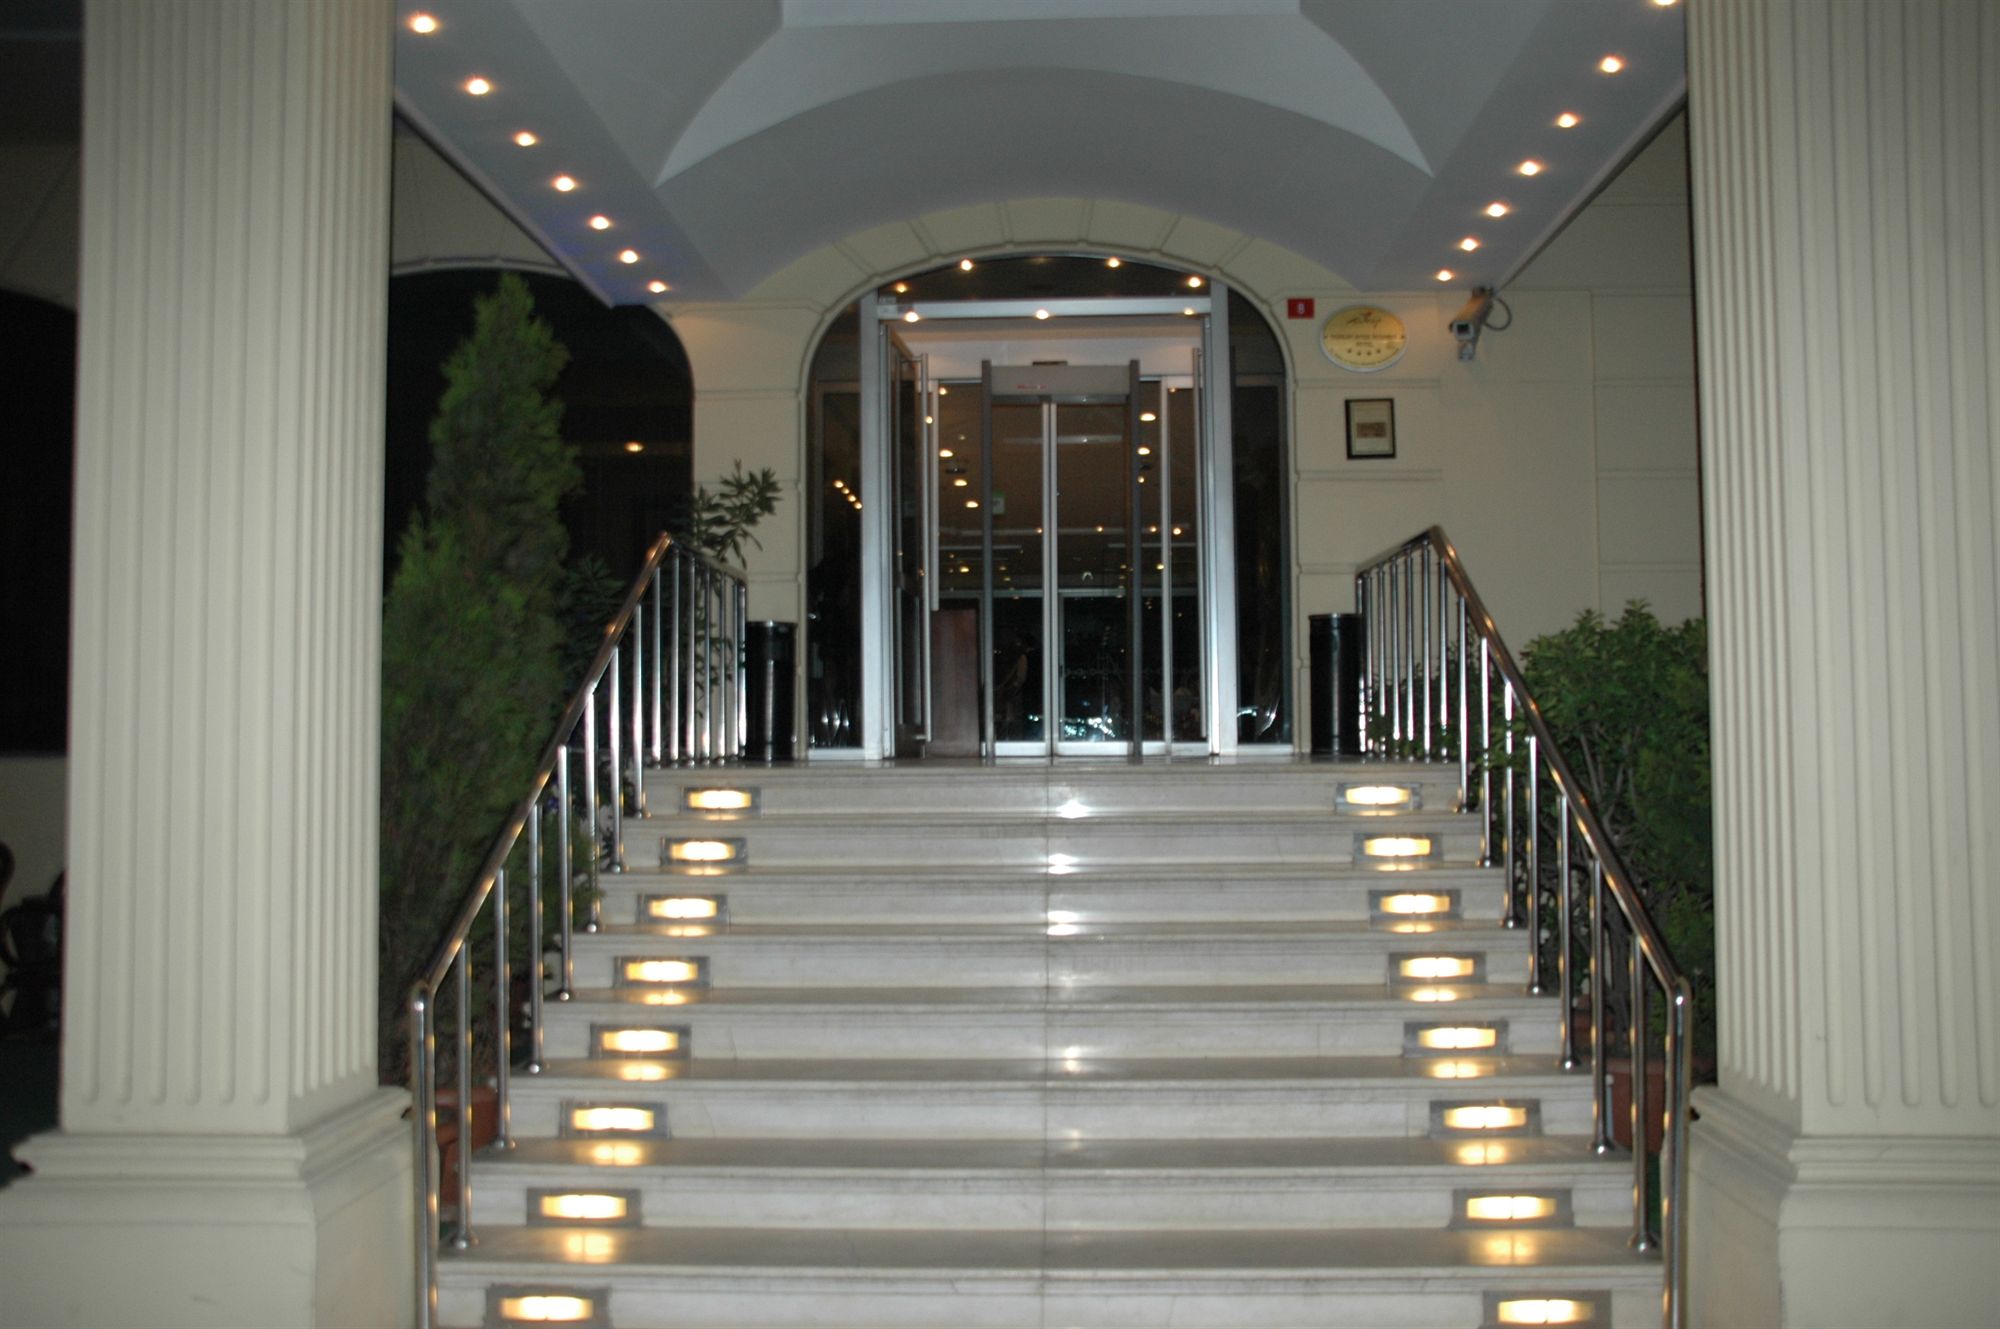 Topkapi Inter Istanbul Hotel